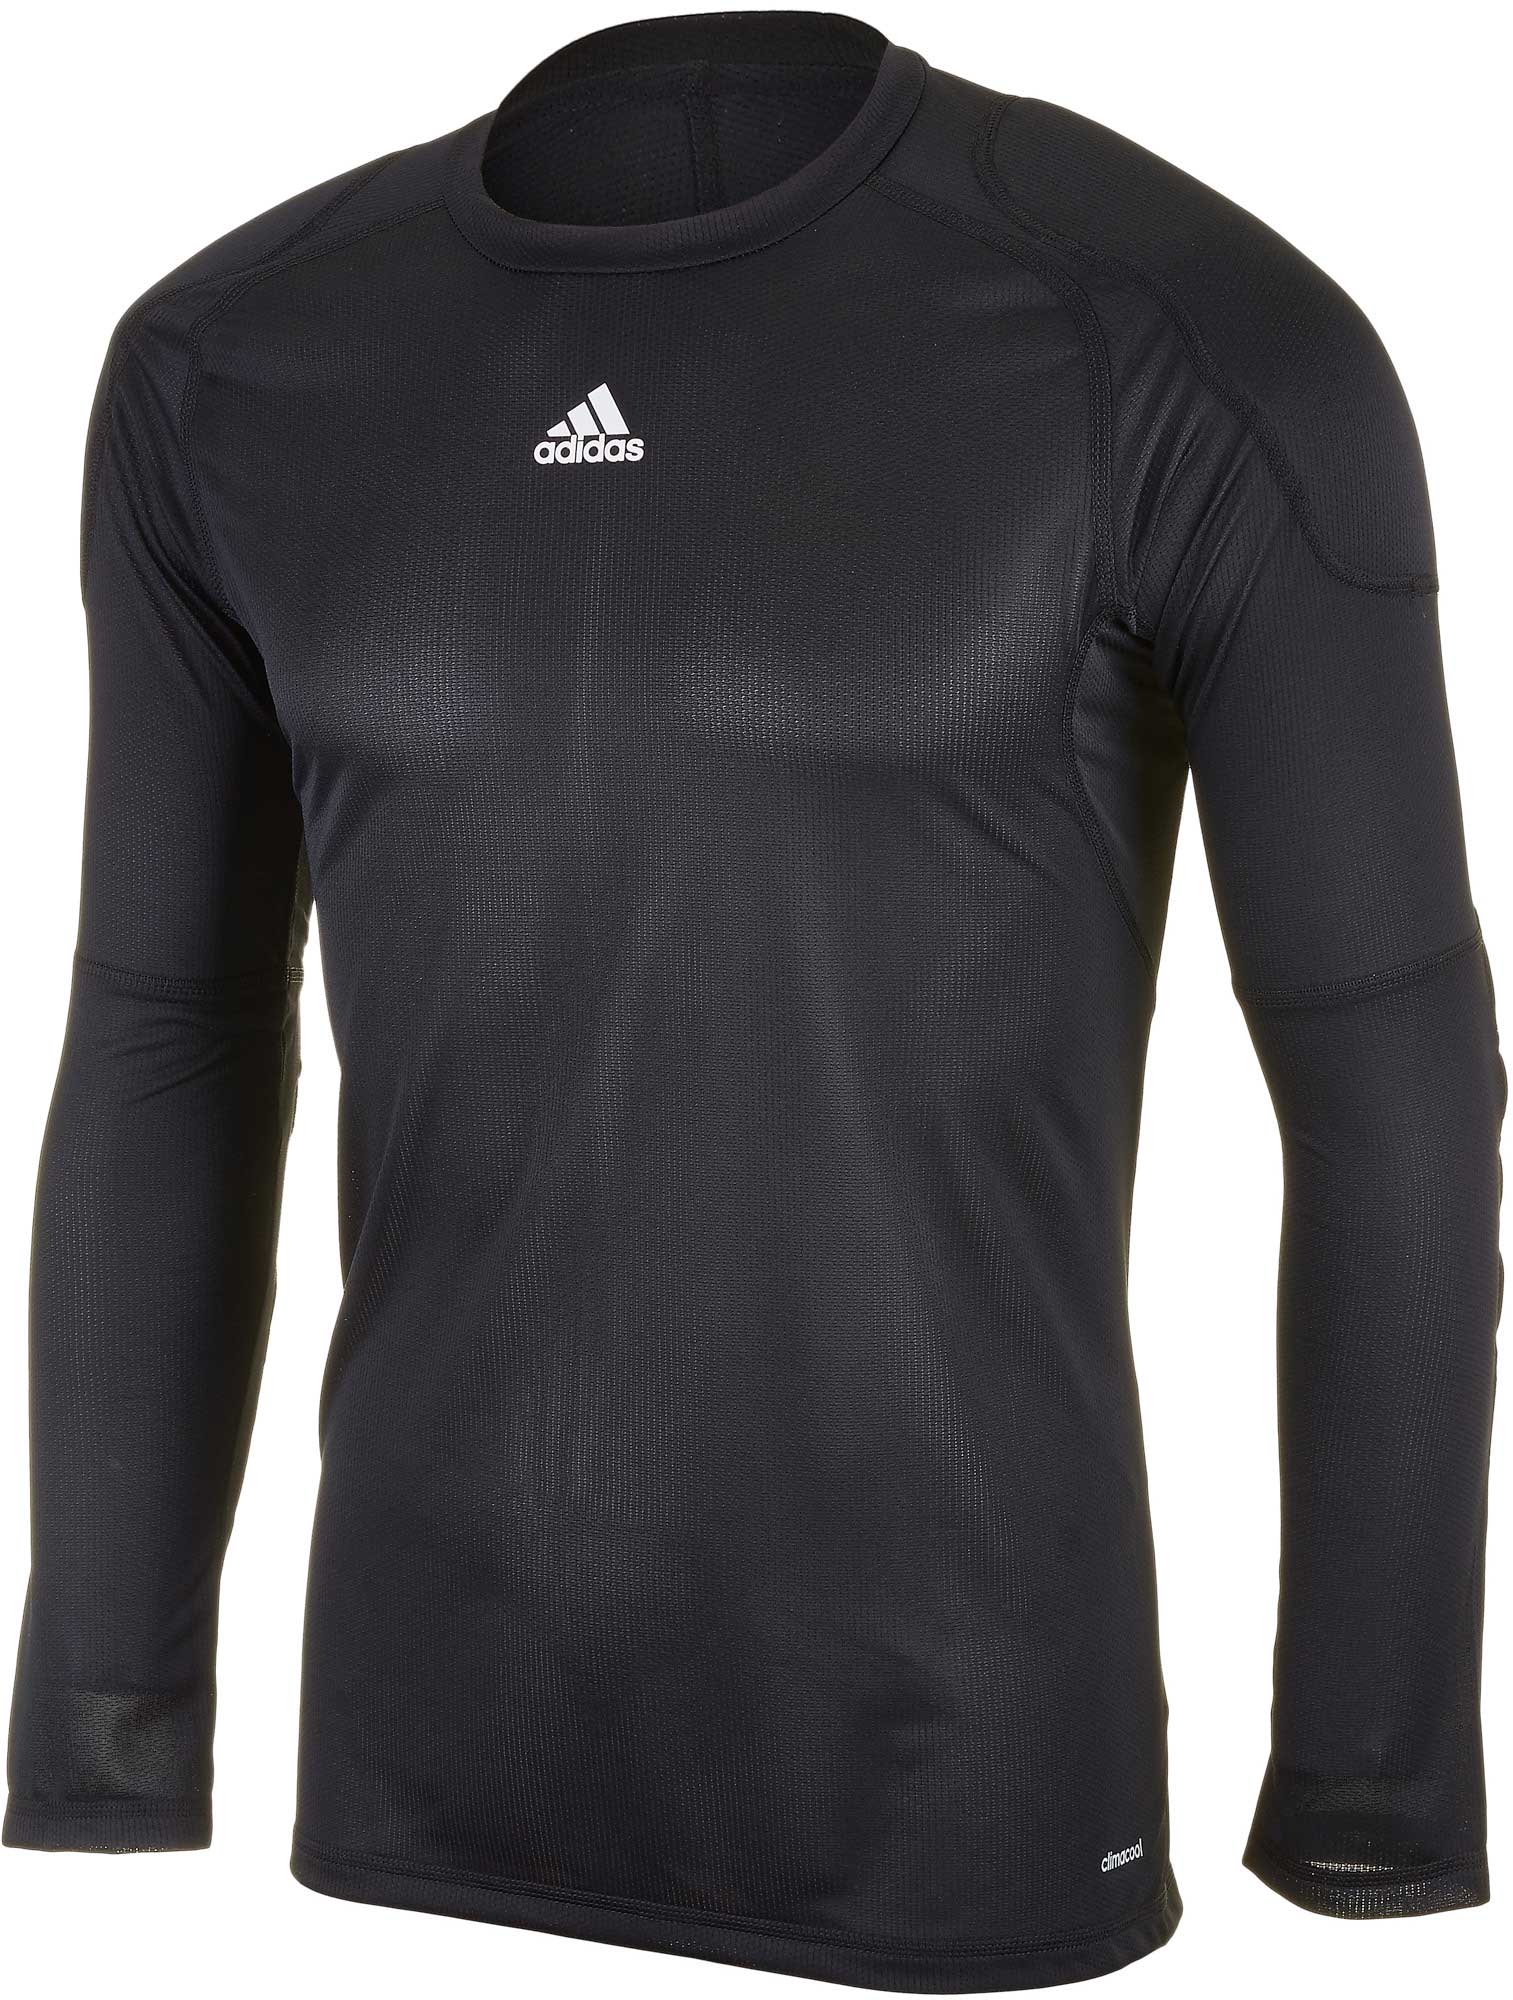 adidas Goalkeeper Undershirts - Black 